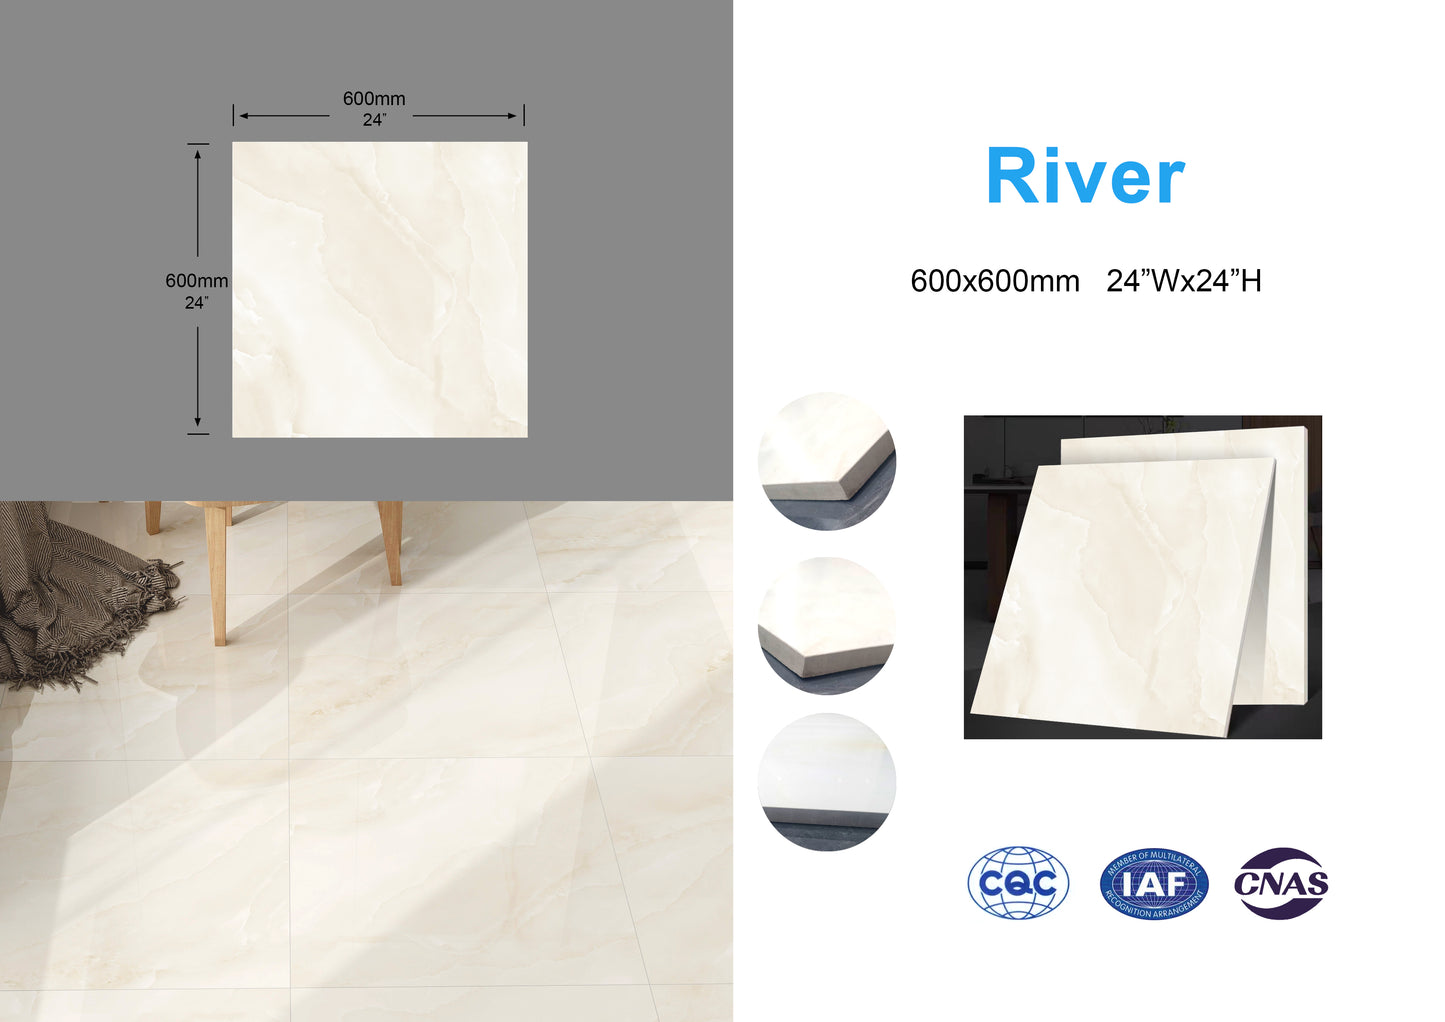 River family Full Polished Glazed Tile 24"x24" 4pcs/box 16sf/box $20.64/box $1.29/sf (15 days return/exchange) Bulk Deal 1000sf+ $1.09/SF(No return/no exchange)